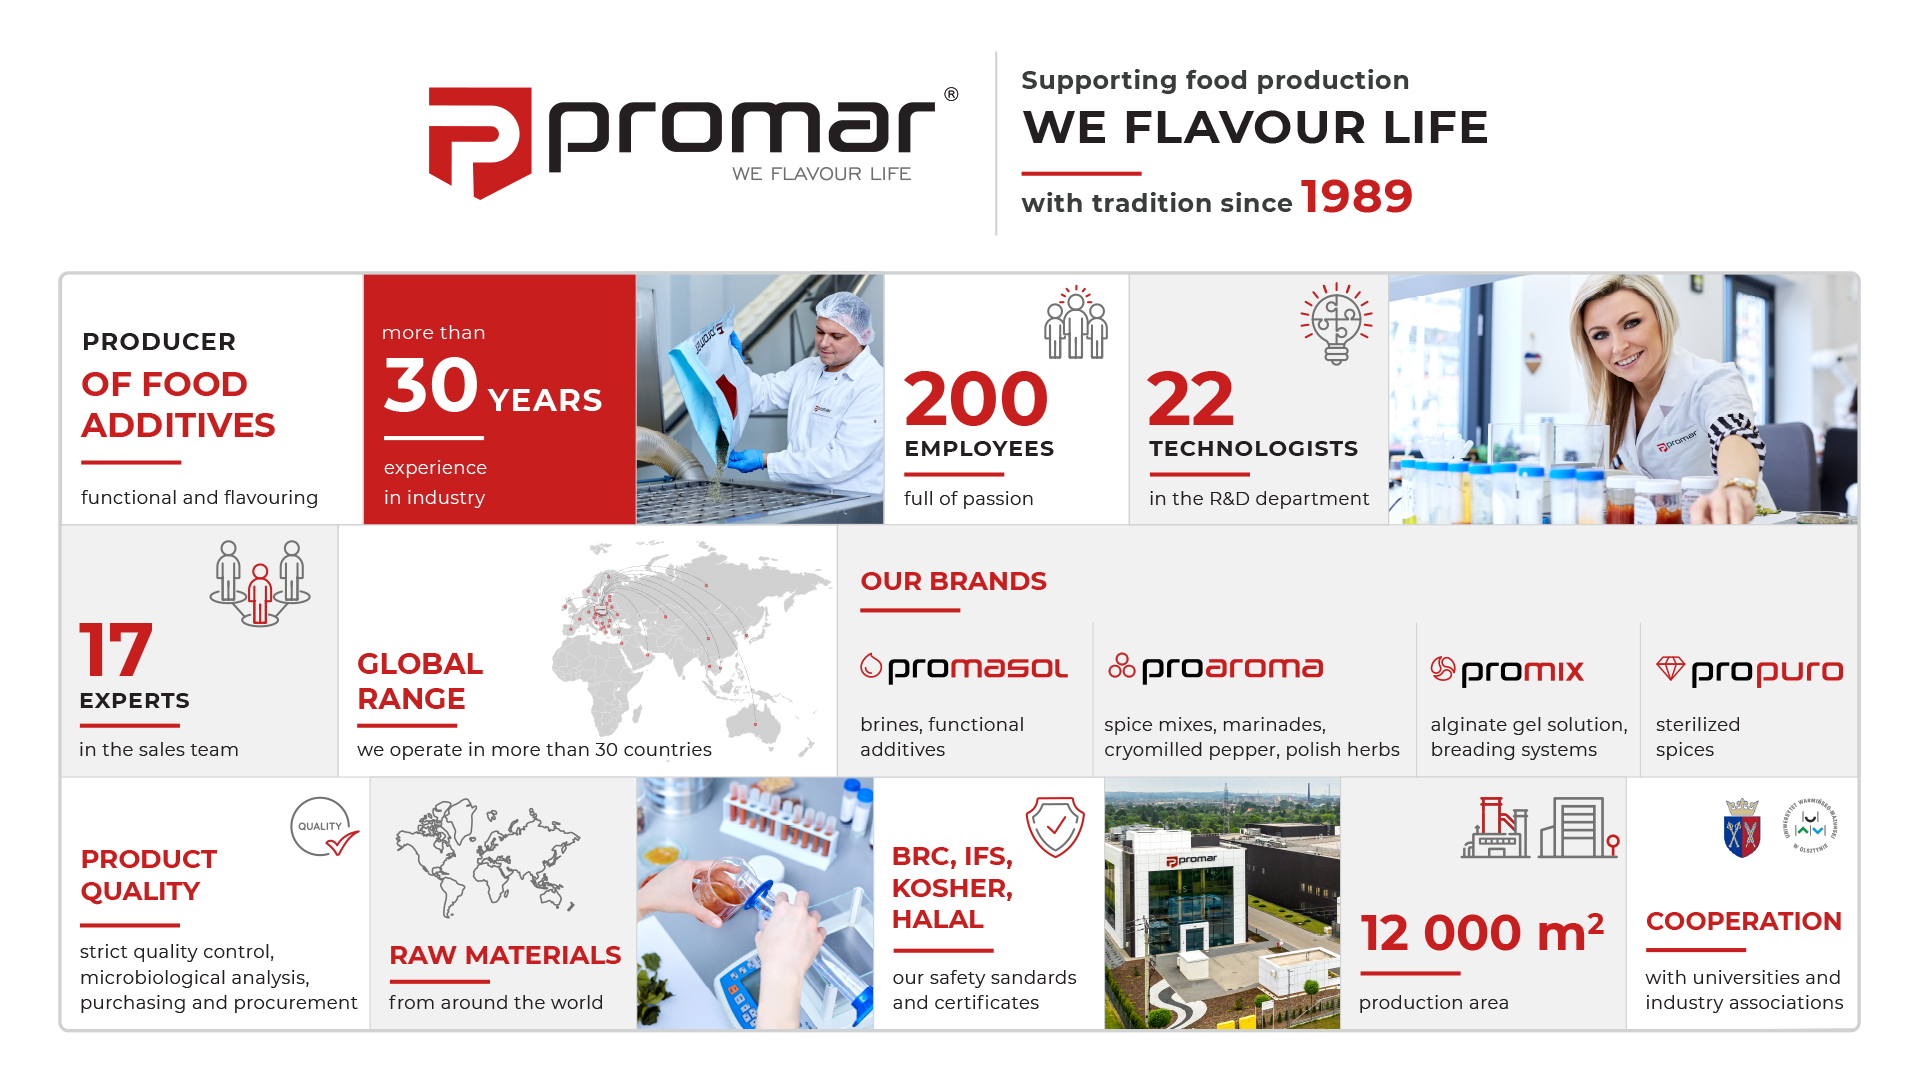 PROMAR PPH Sp. z o.o. - Polish producer of food additives